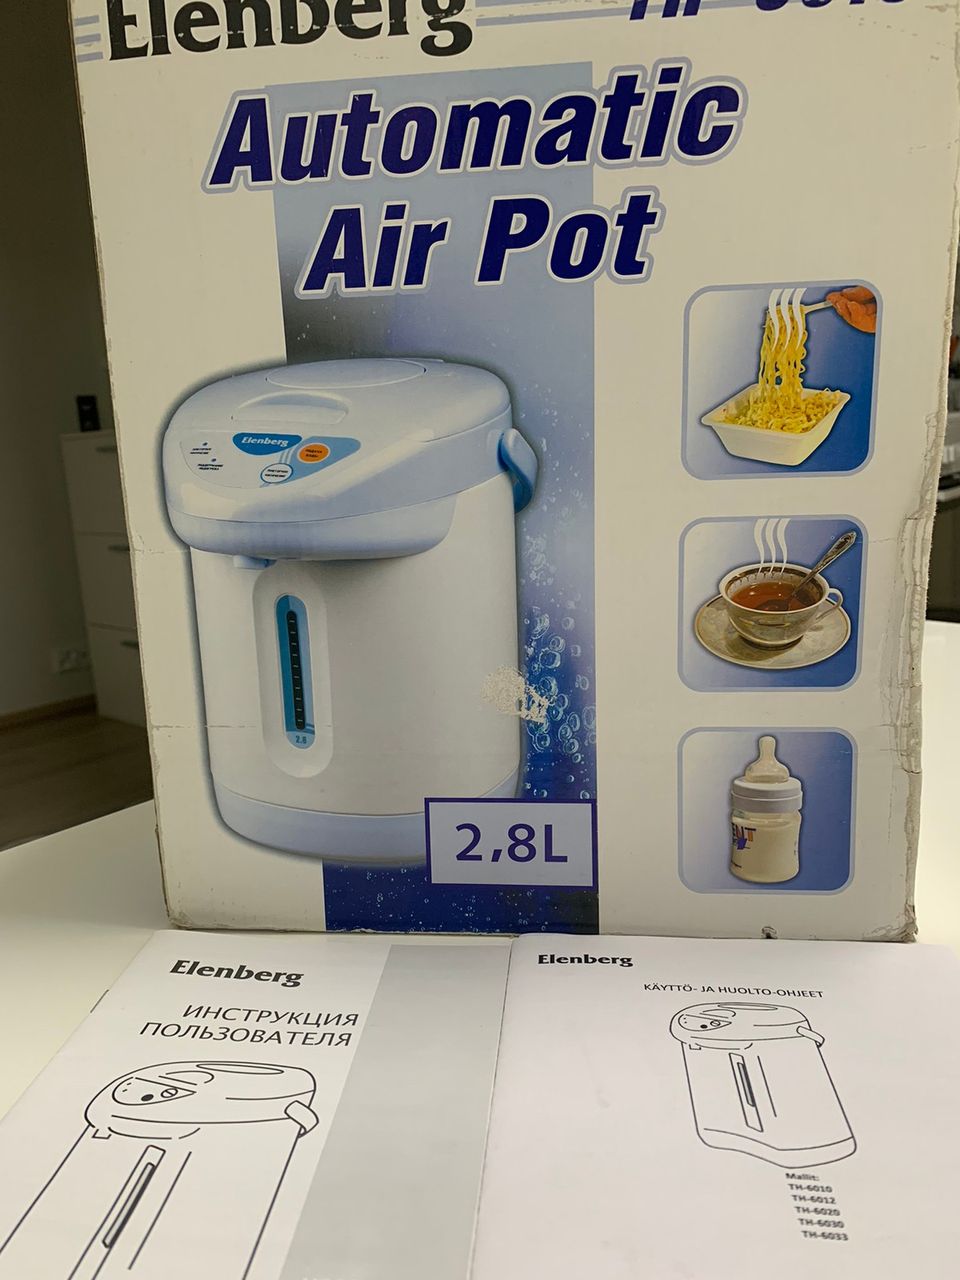 Automatic air pot